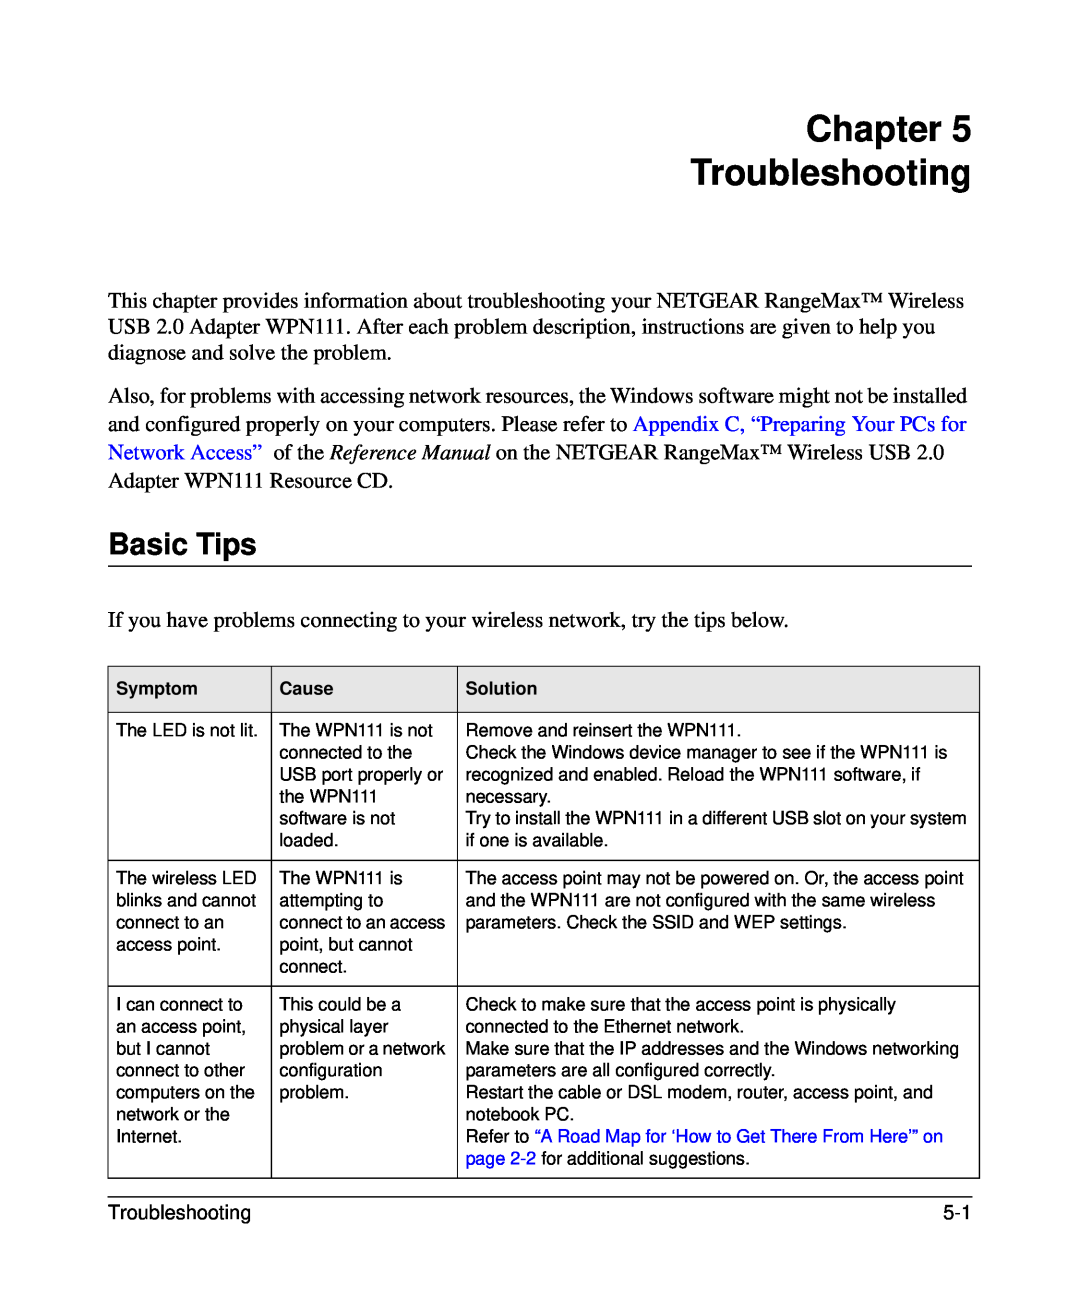 NETGEAR WPN111 user manual Chapter Troubleshooting, Basic Tips 